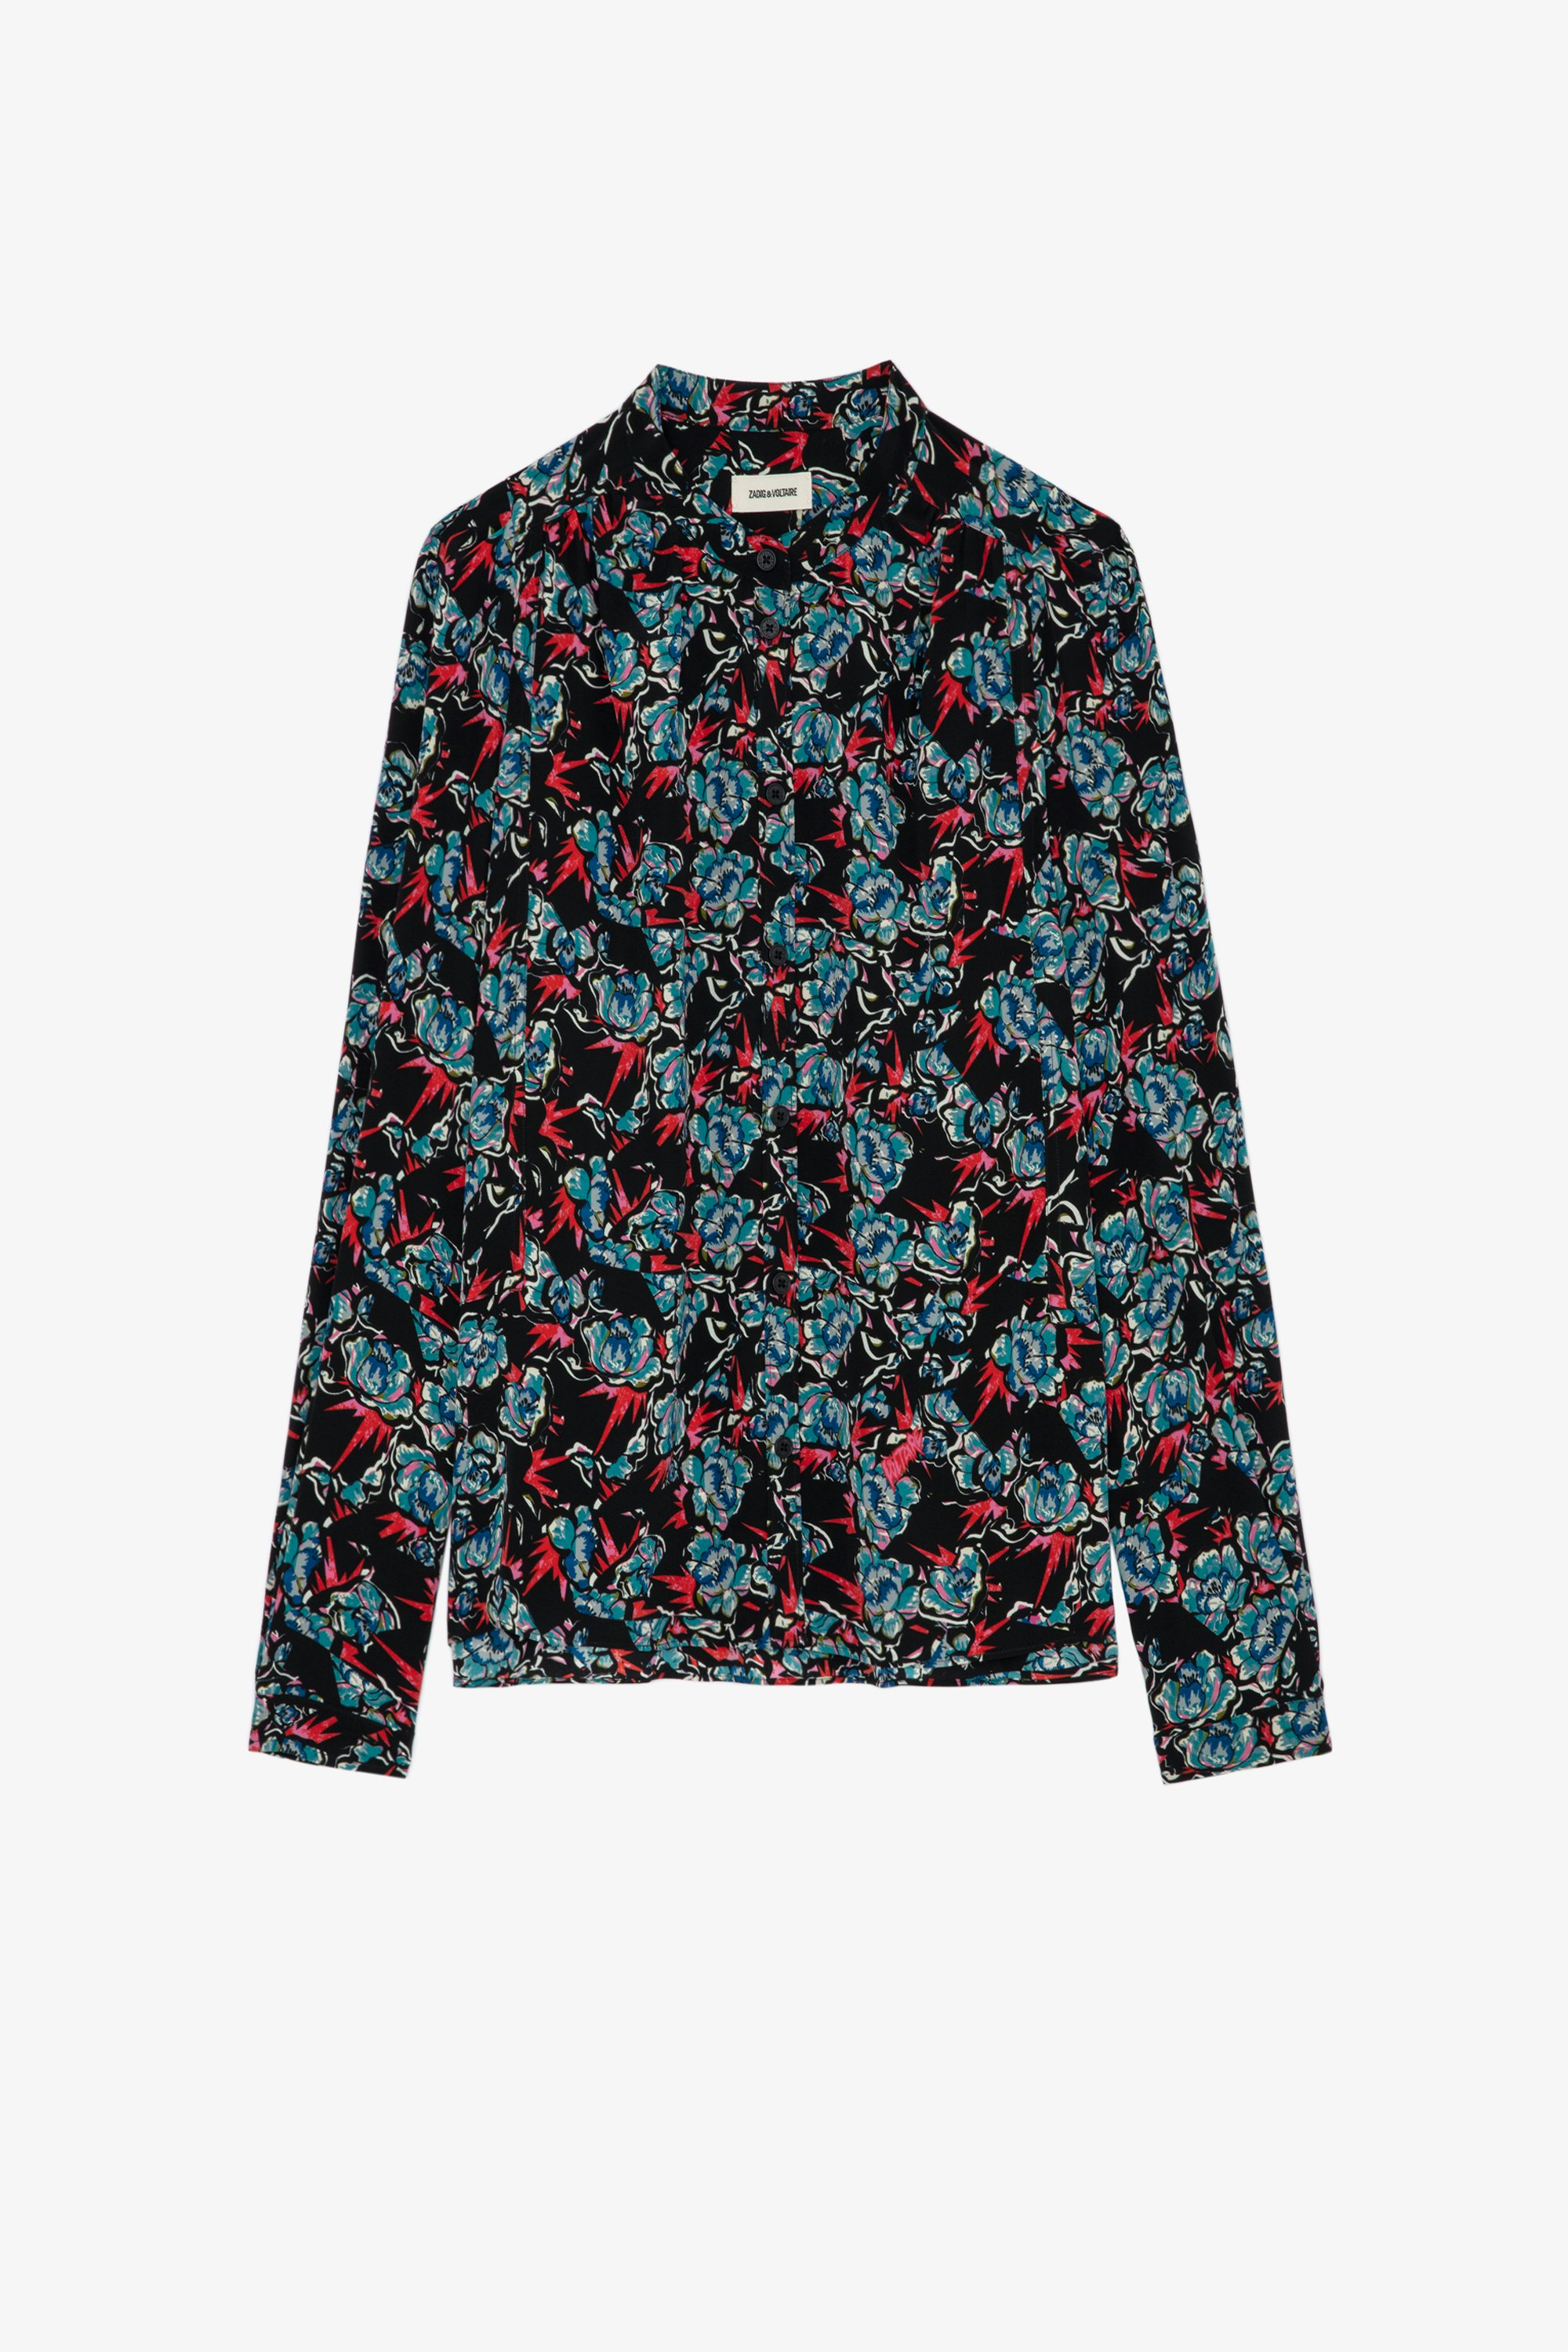 Tchin Thunder Silk Shirt Women’s black floral-print silk shirt.